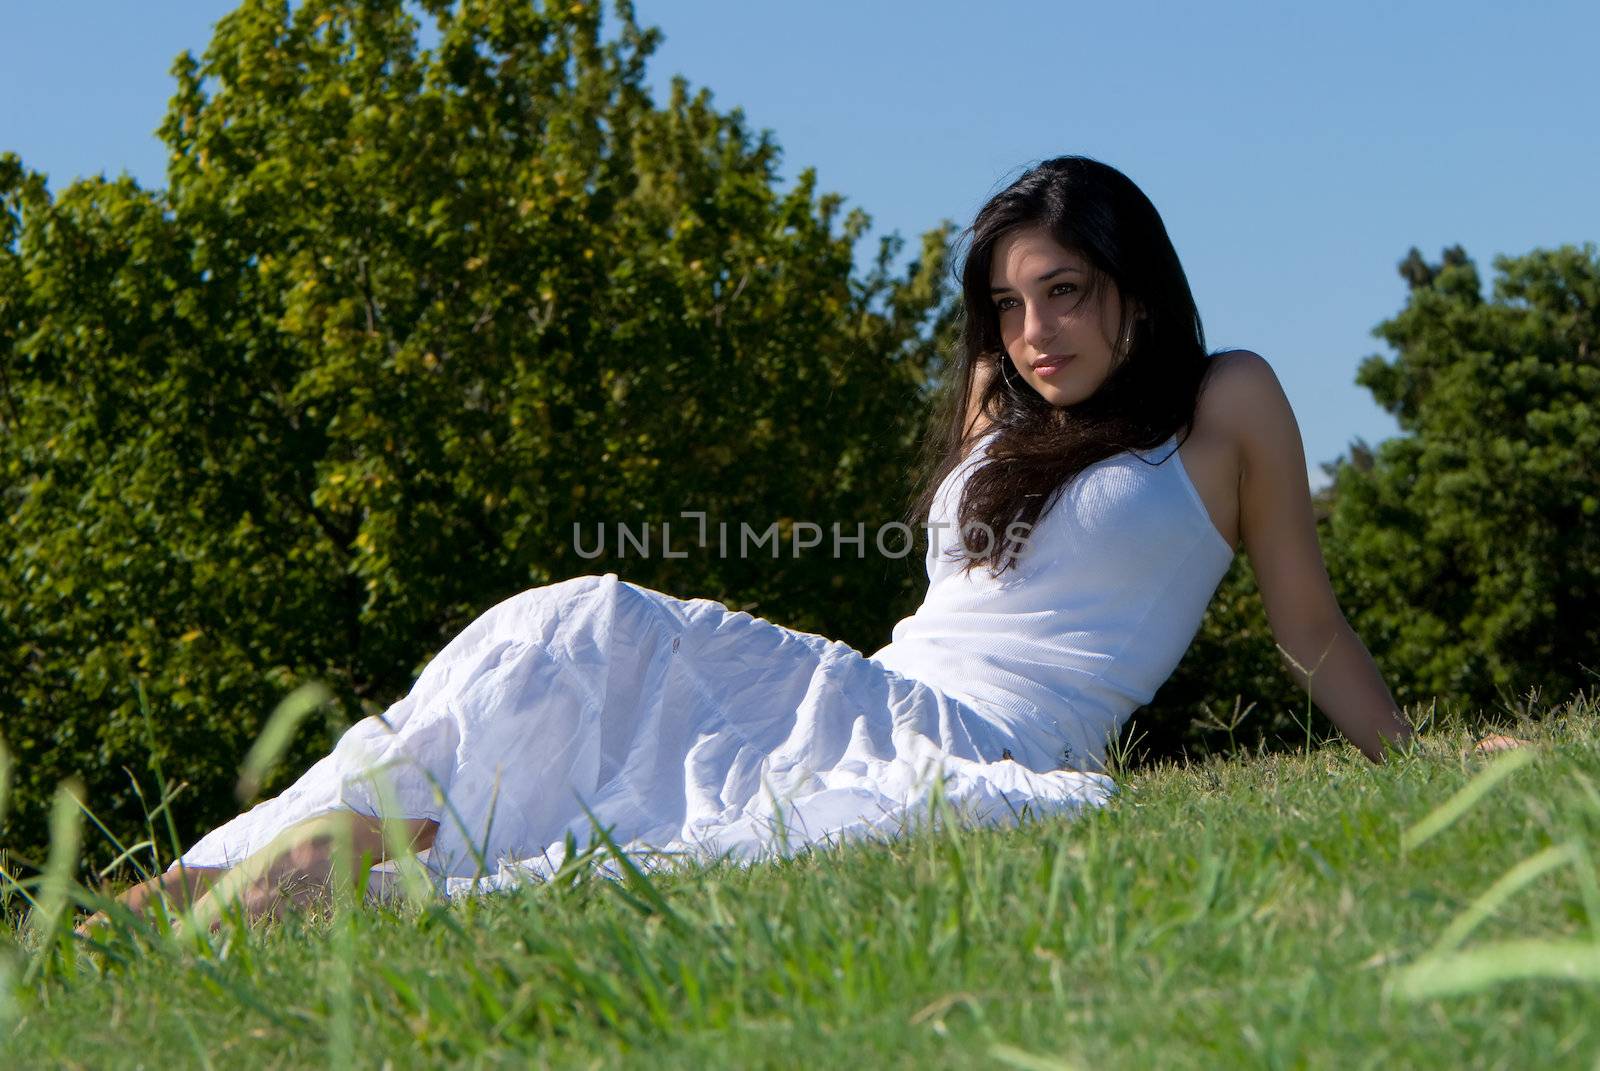 Relaxing girl on meadow